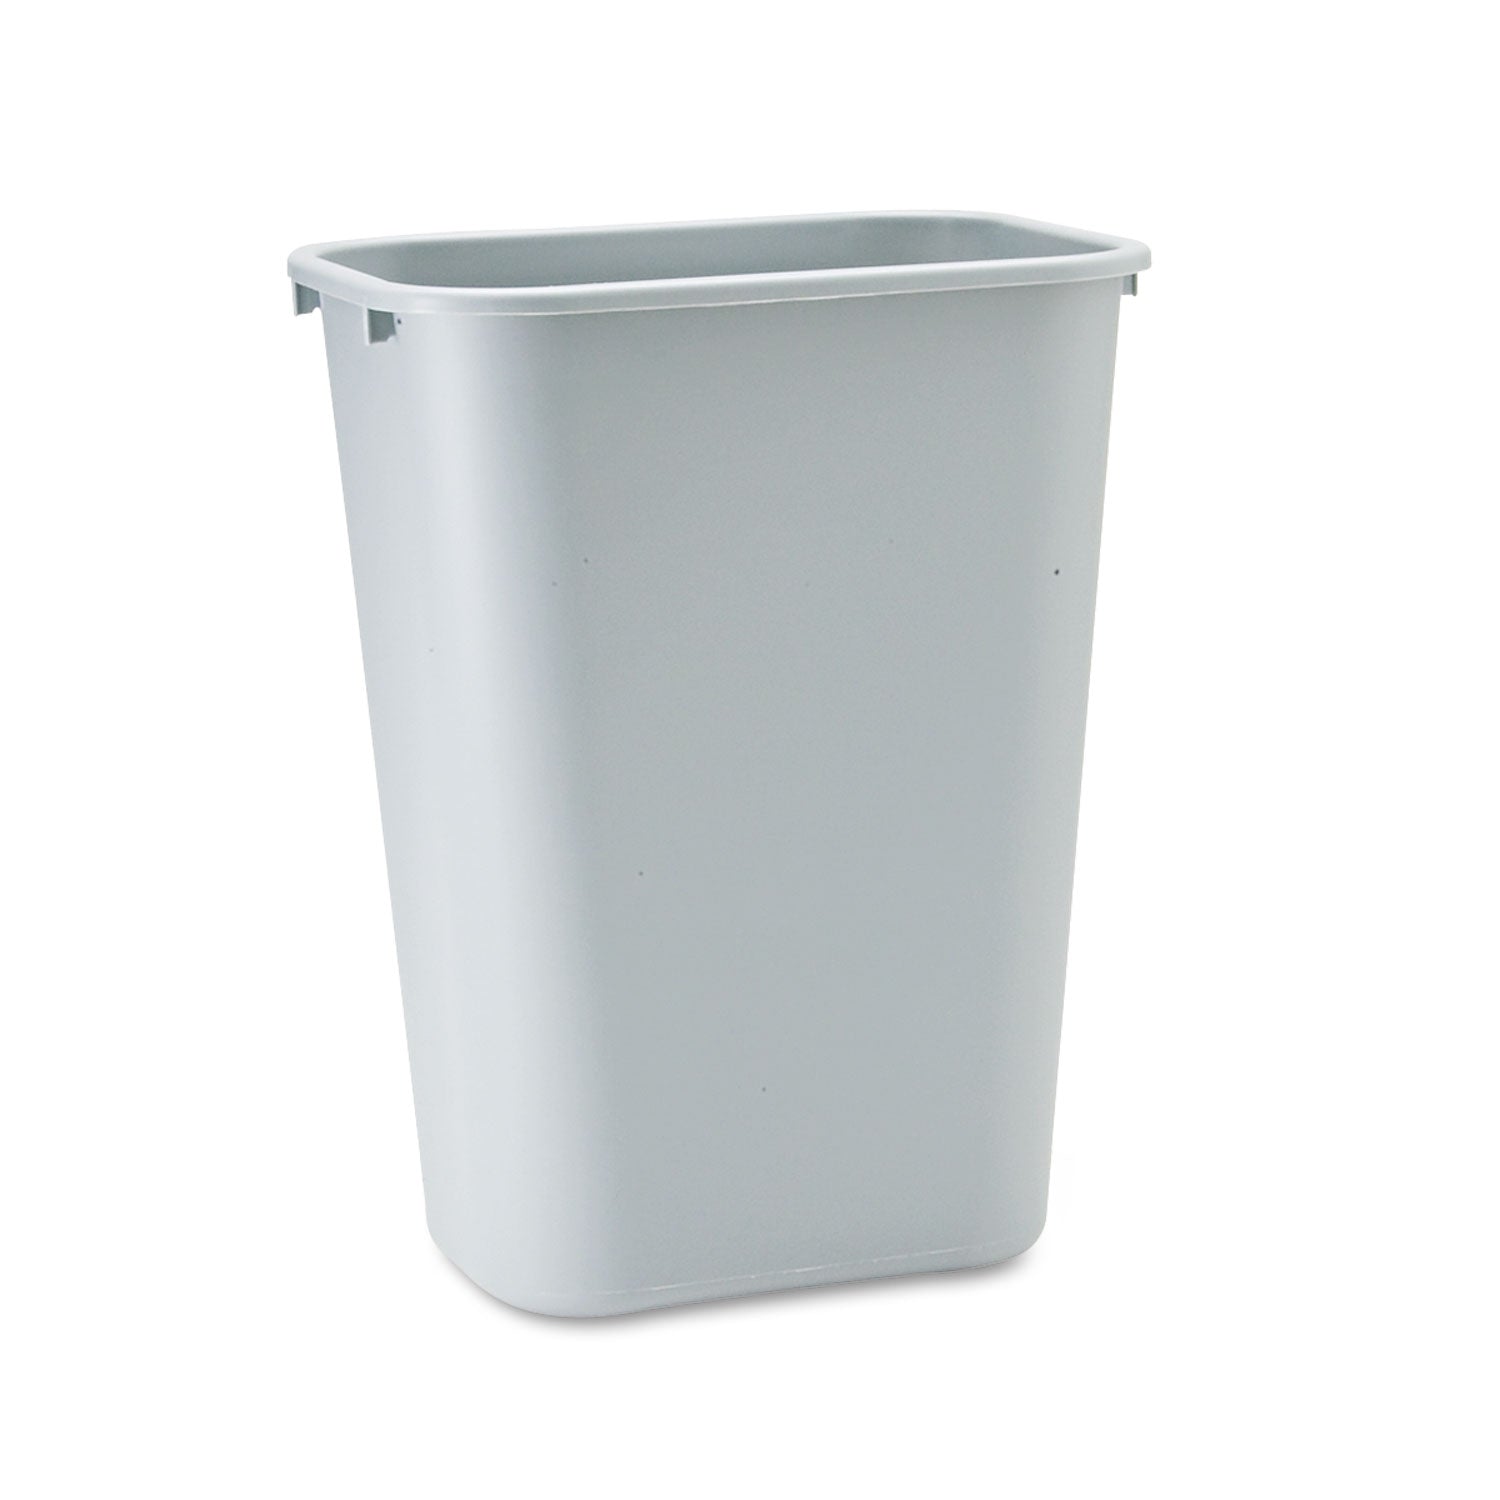 Deskside Plastic Wastebasket, 10.25 gal, Plastic, Gray - 